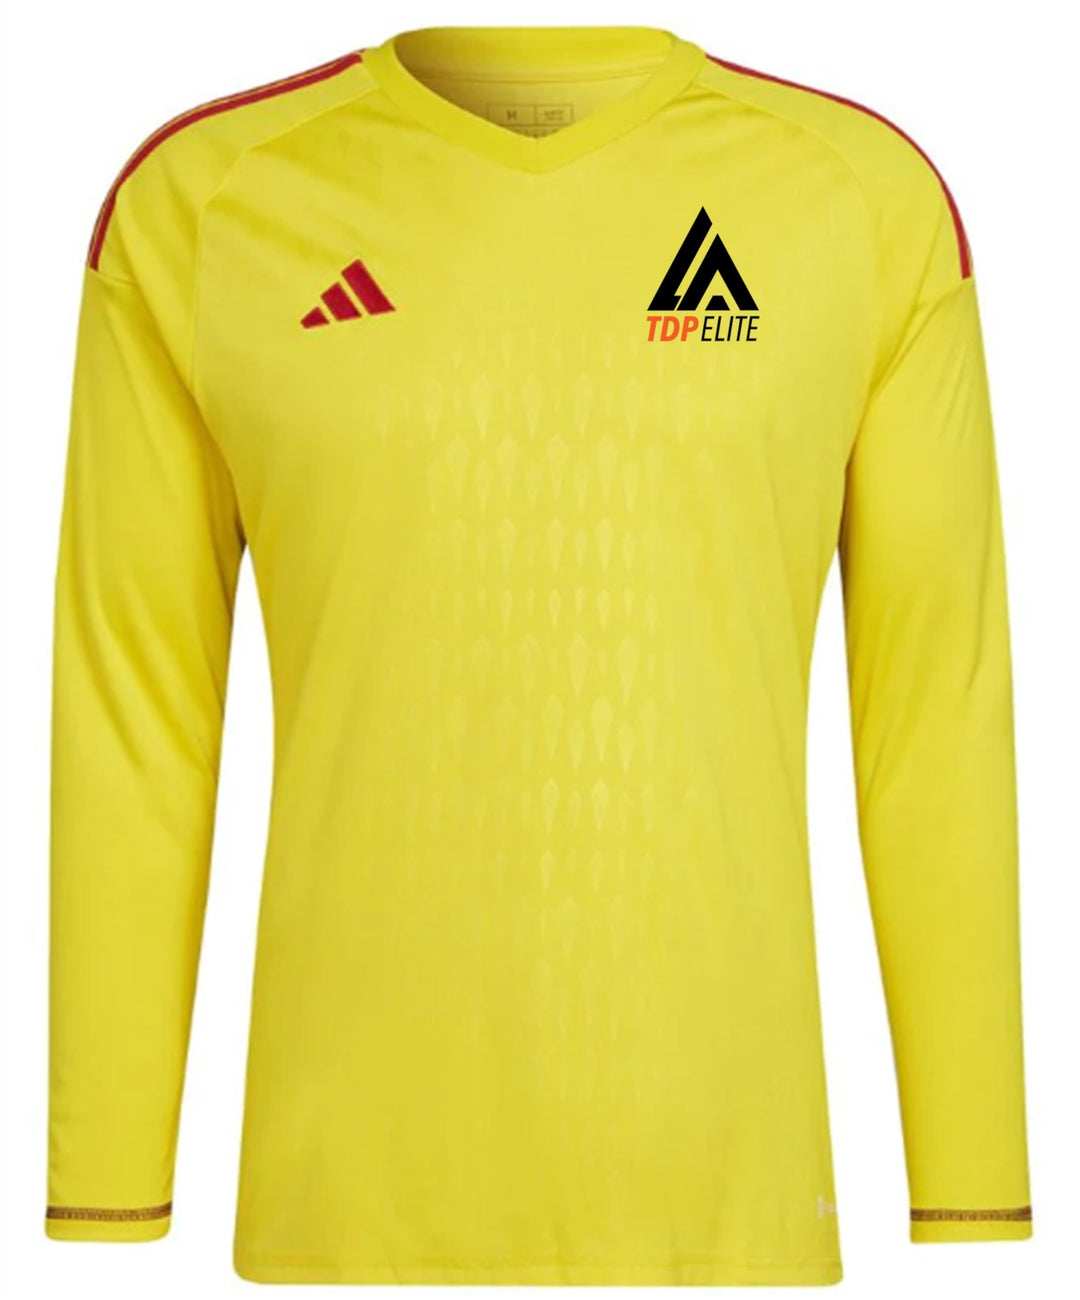 adidas LATDP Elite Men's Tiro 23 Long-Sleeve Goalkeeper Jersey -Yellow LA TDP ELITE MENS SMALL TEAM YELLOW/TEAM COLLEGE RED - Third Coast Soccer